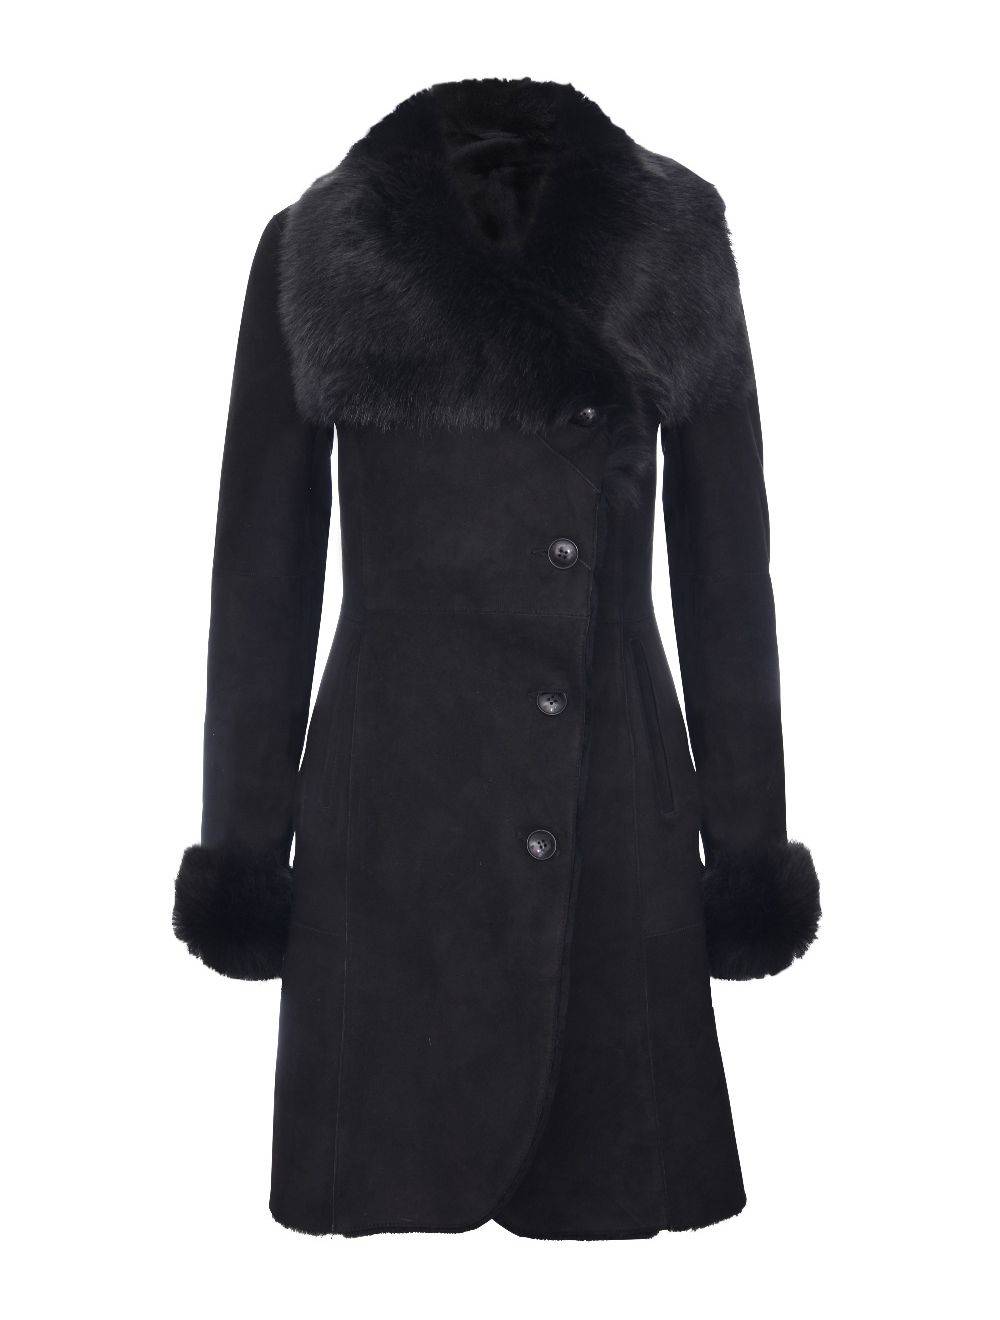 Ladies Black Suede Sheepskin Coat - Nikita for sale - Woodcock and Cavendish